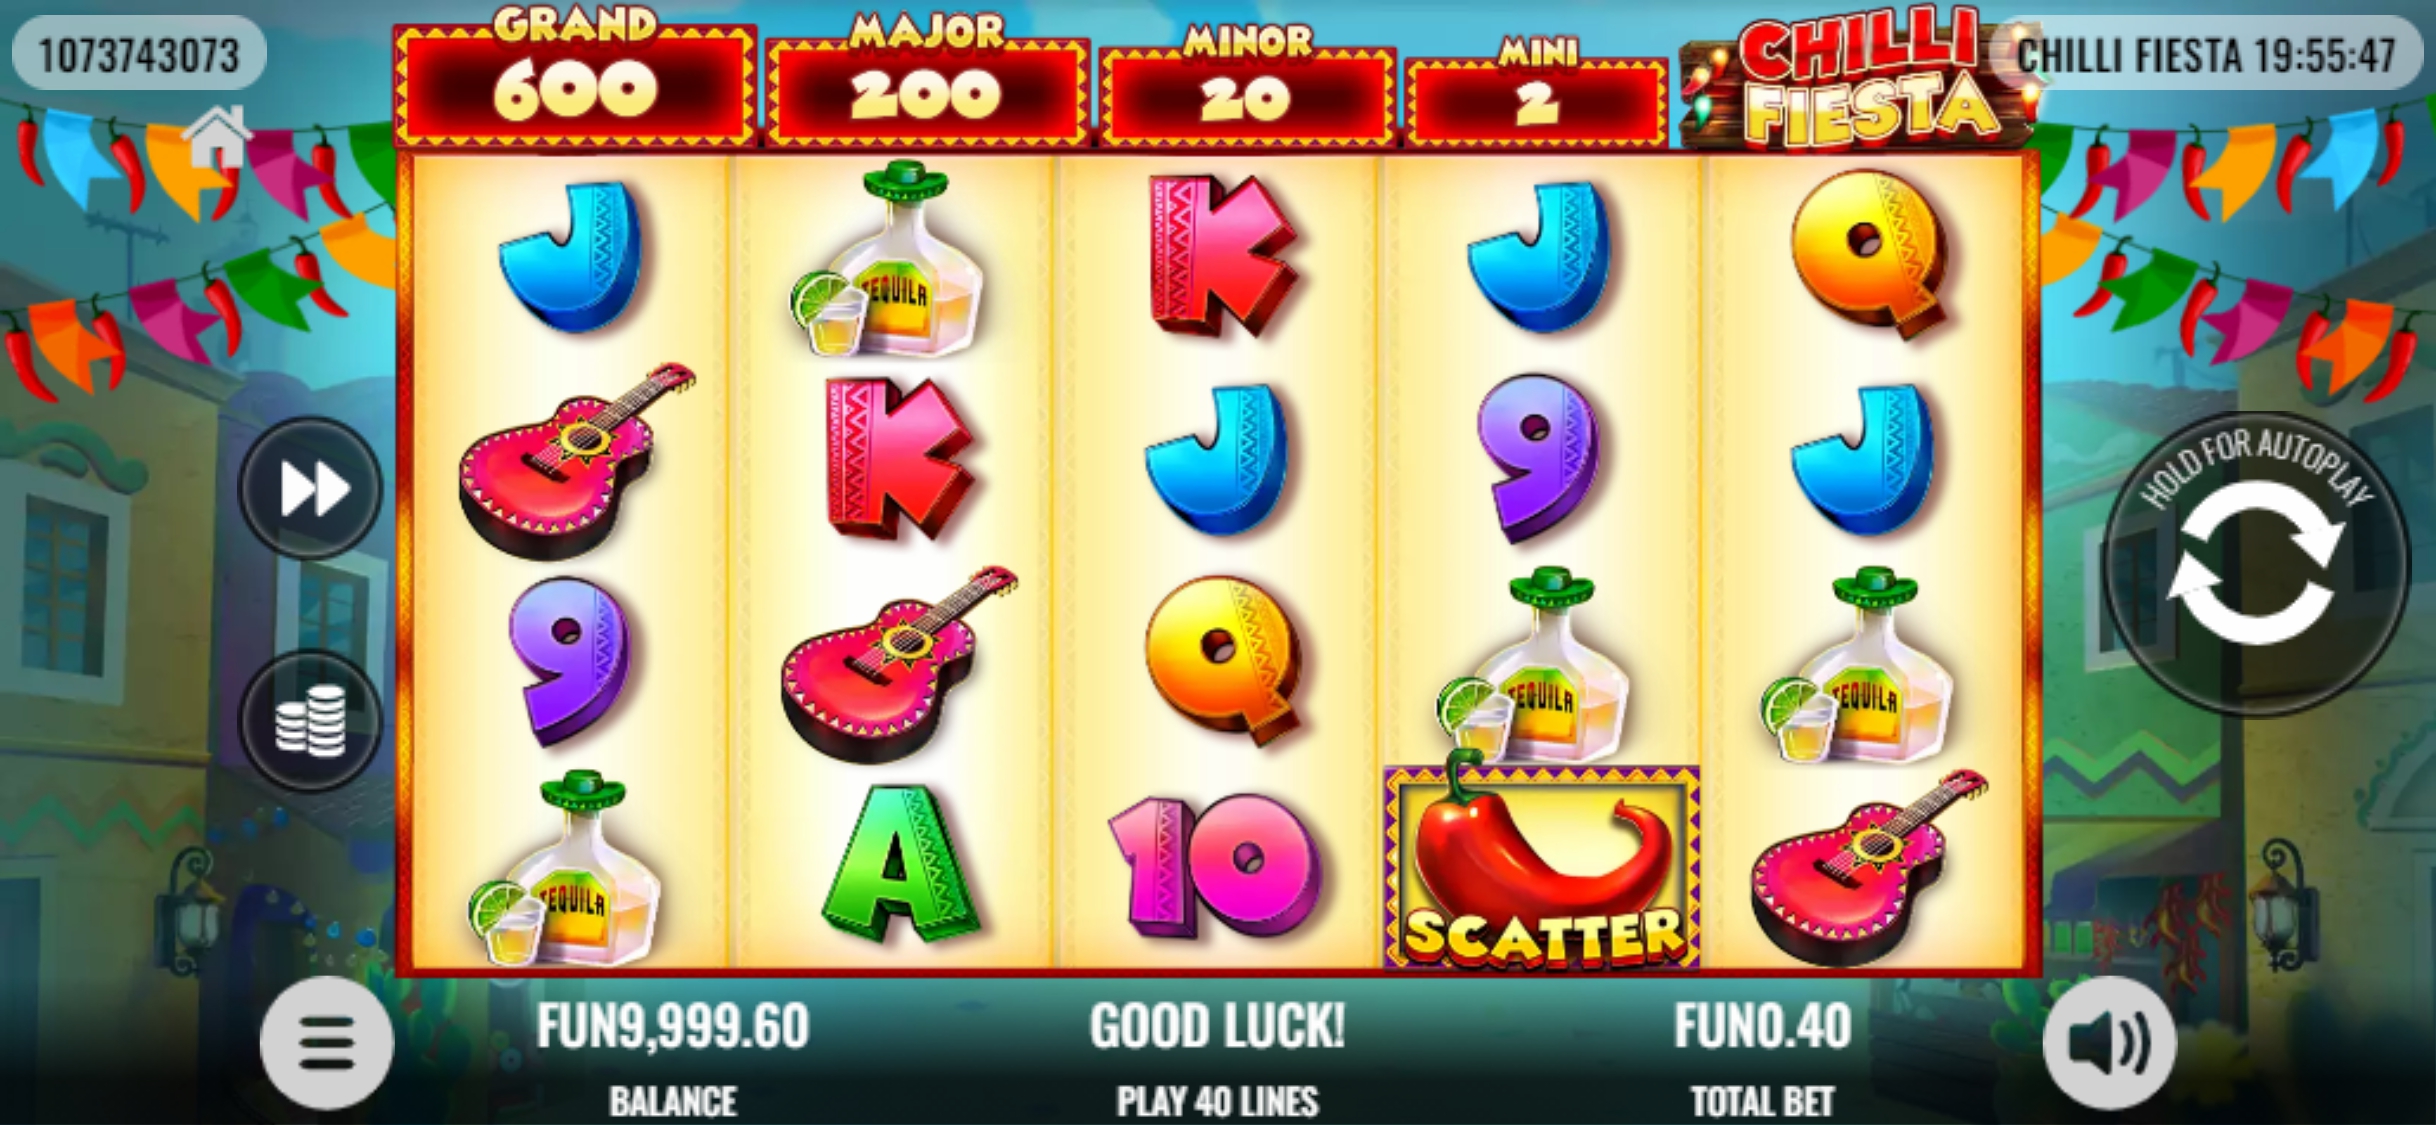 Dragonara Casino Mobile Slot Games Review